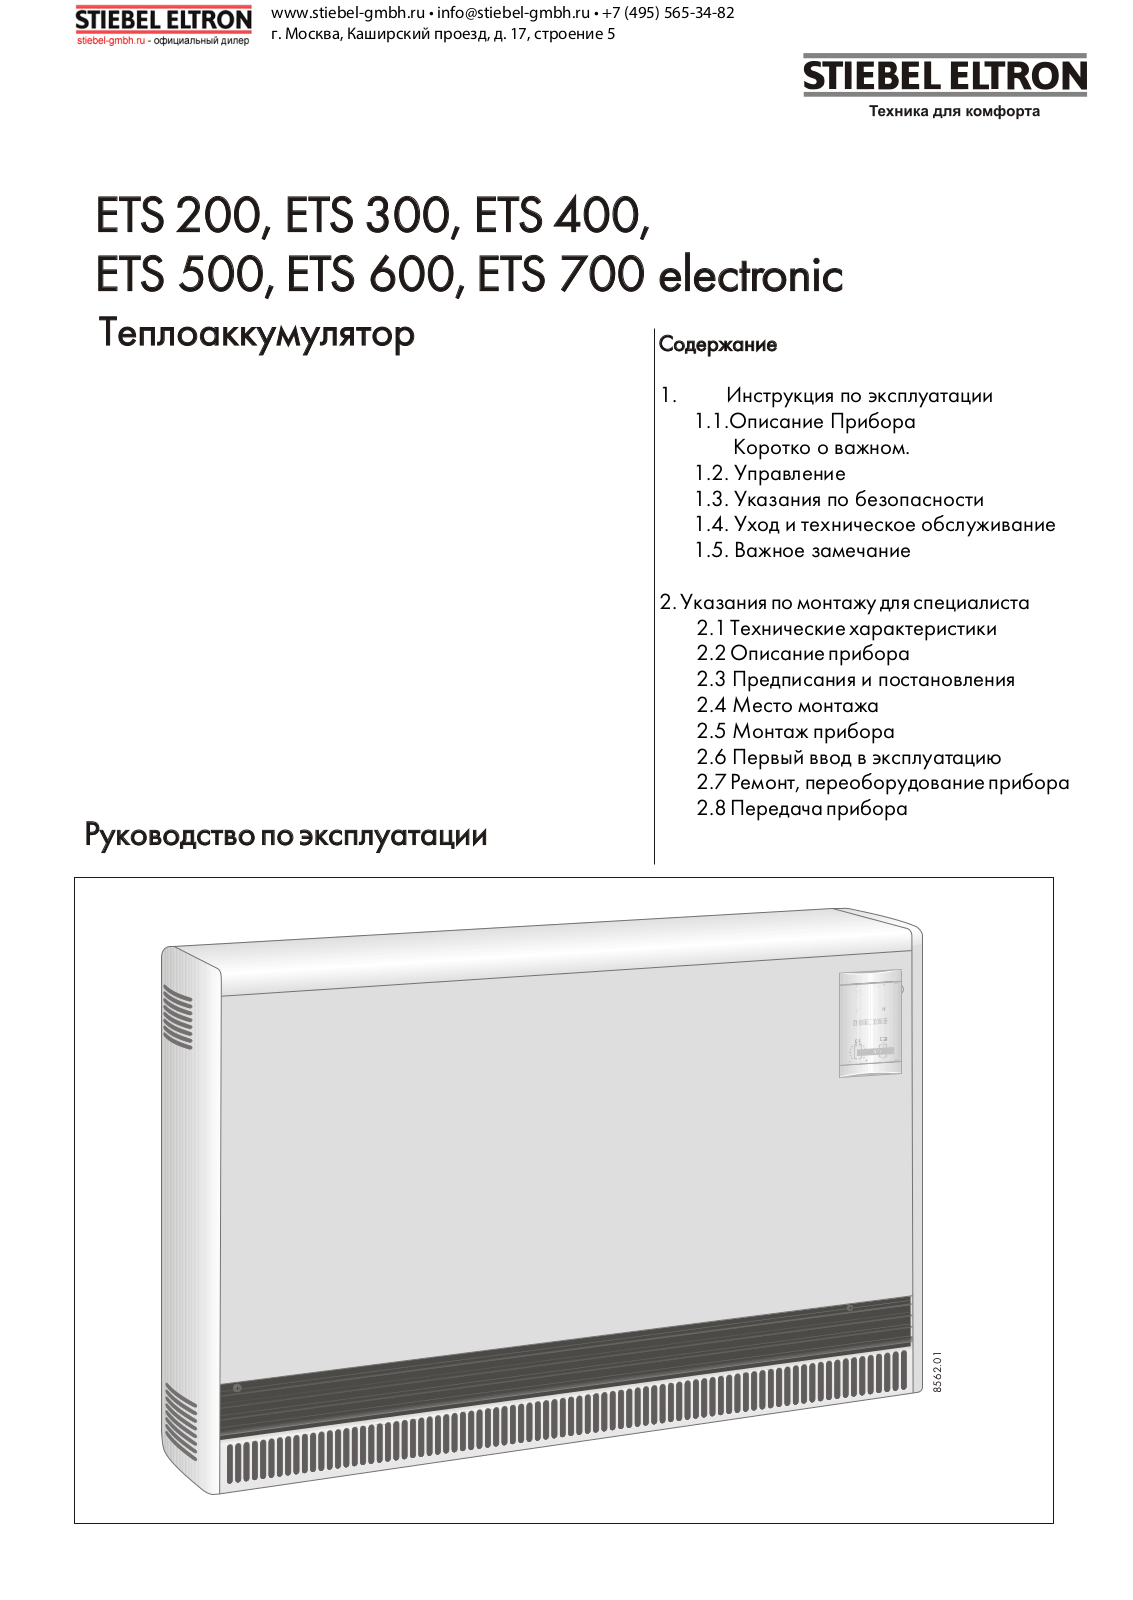 Stiebel eltron ETS 400 User Manual